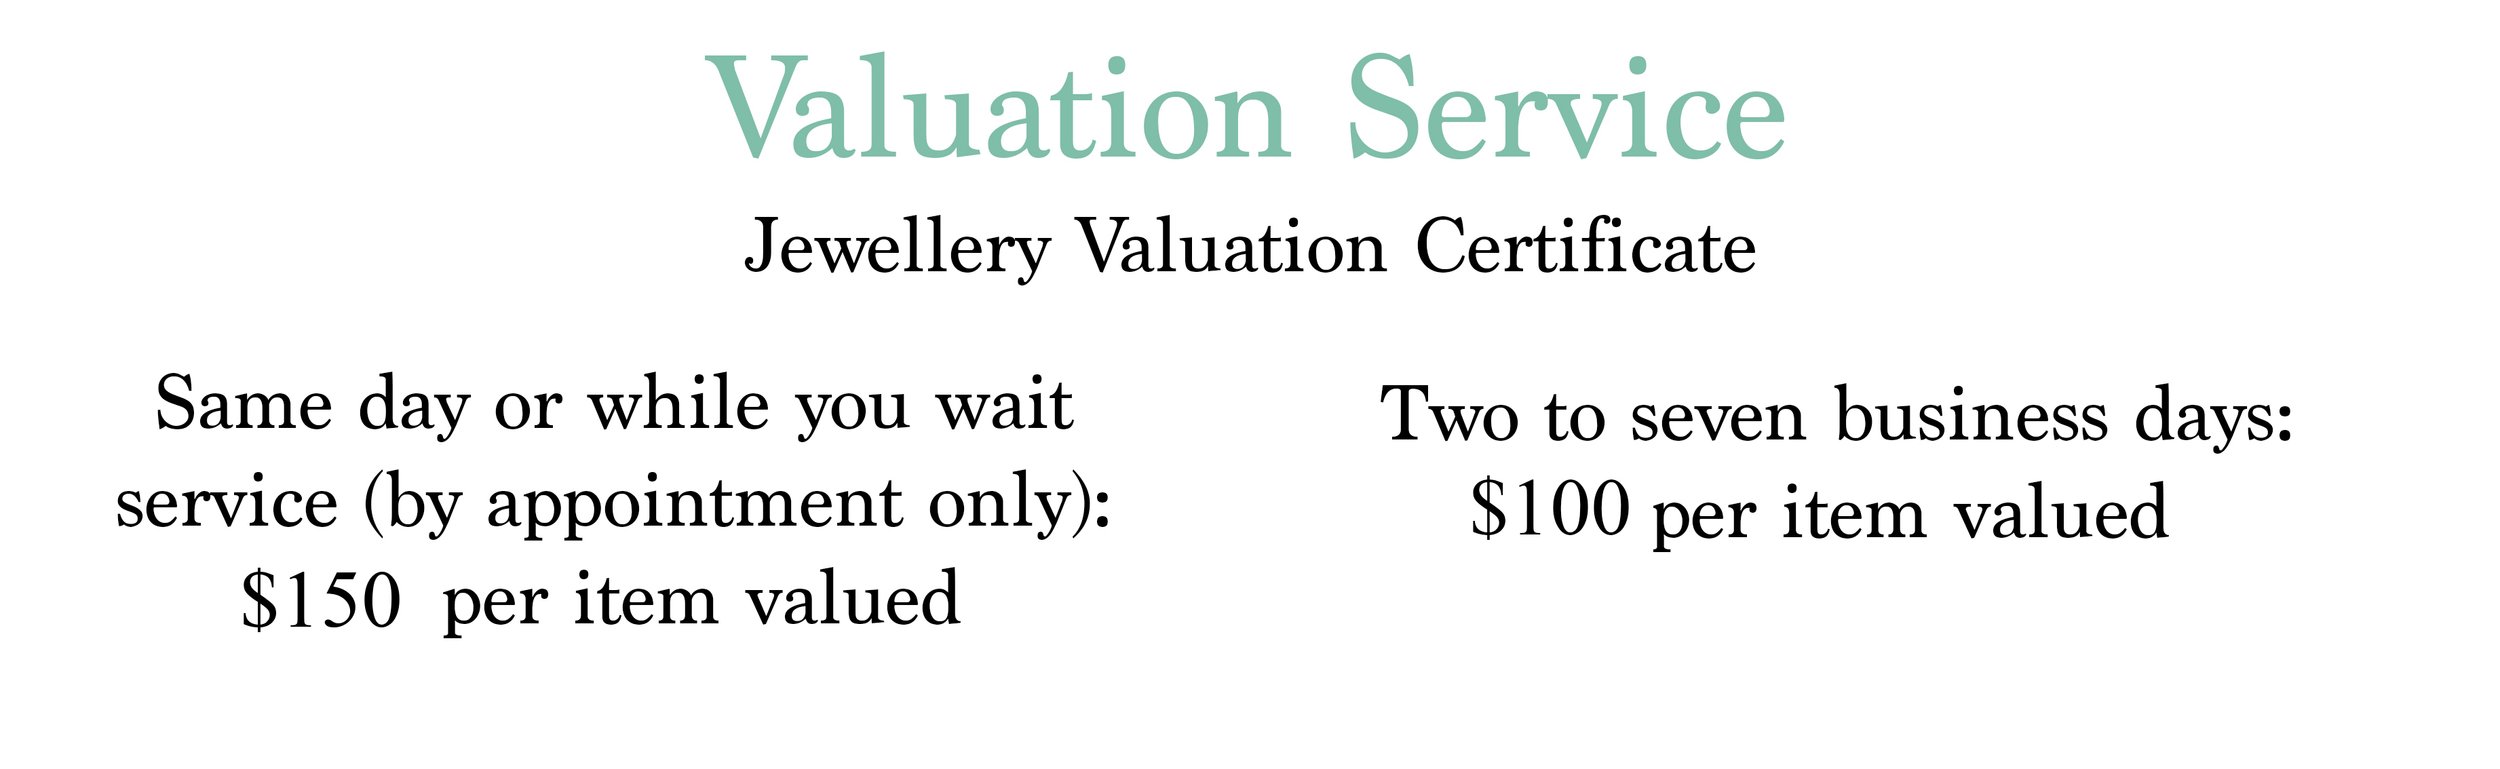 Valuation banner copy.jpg